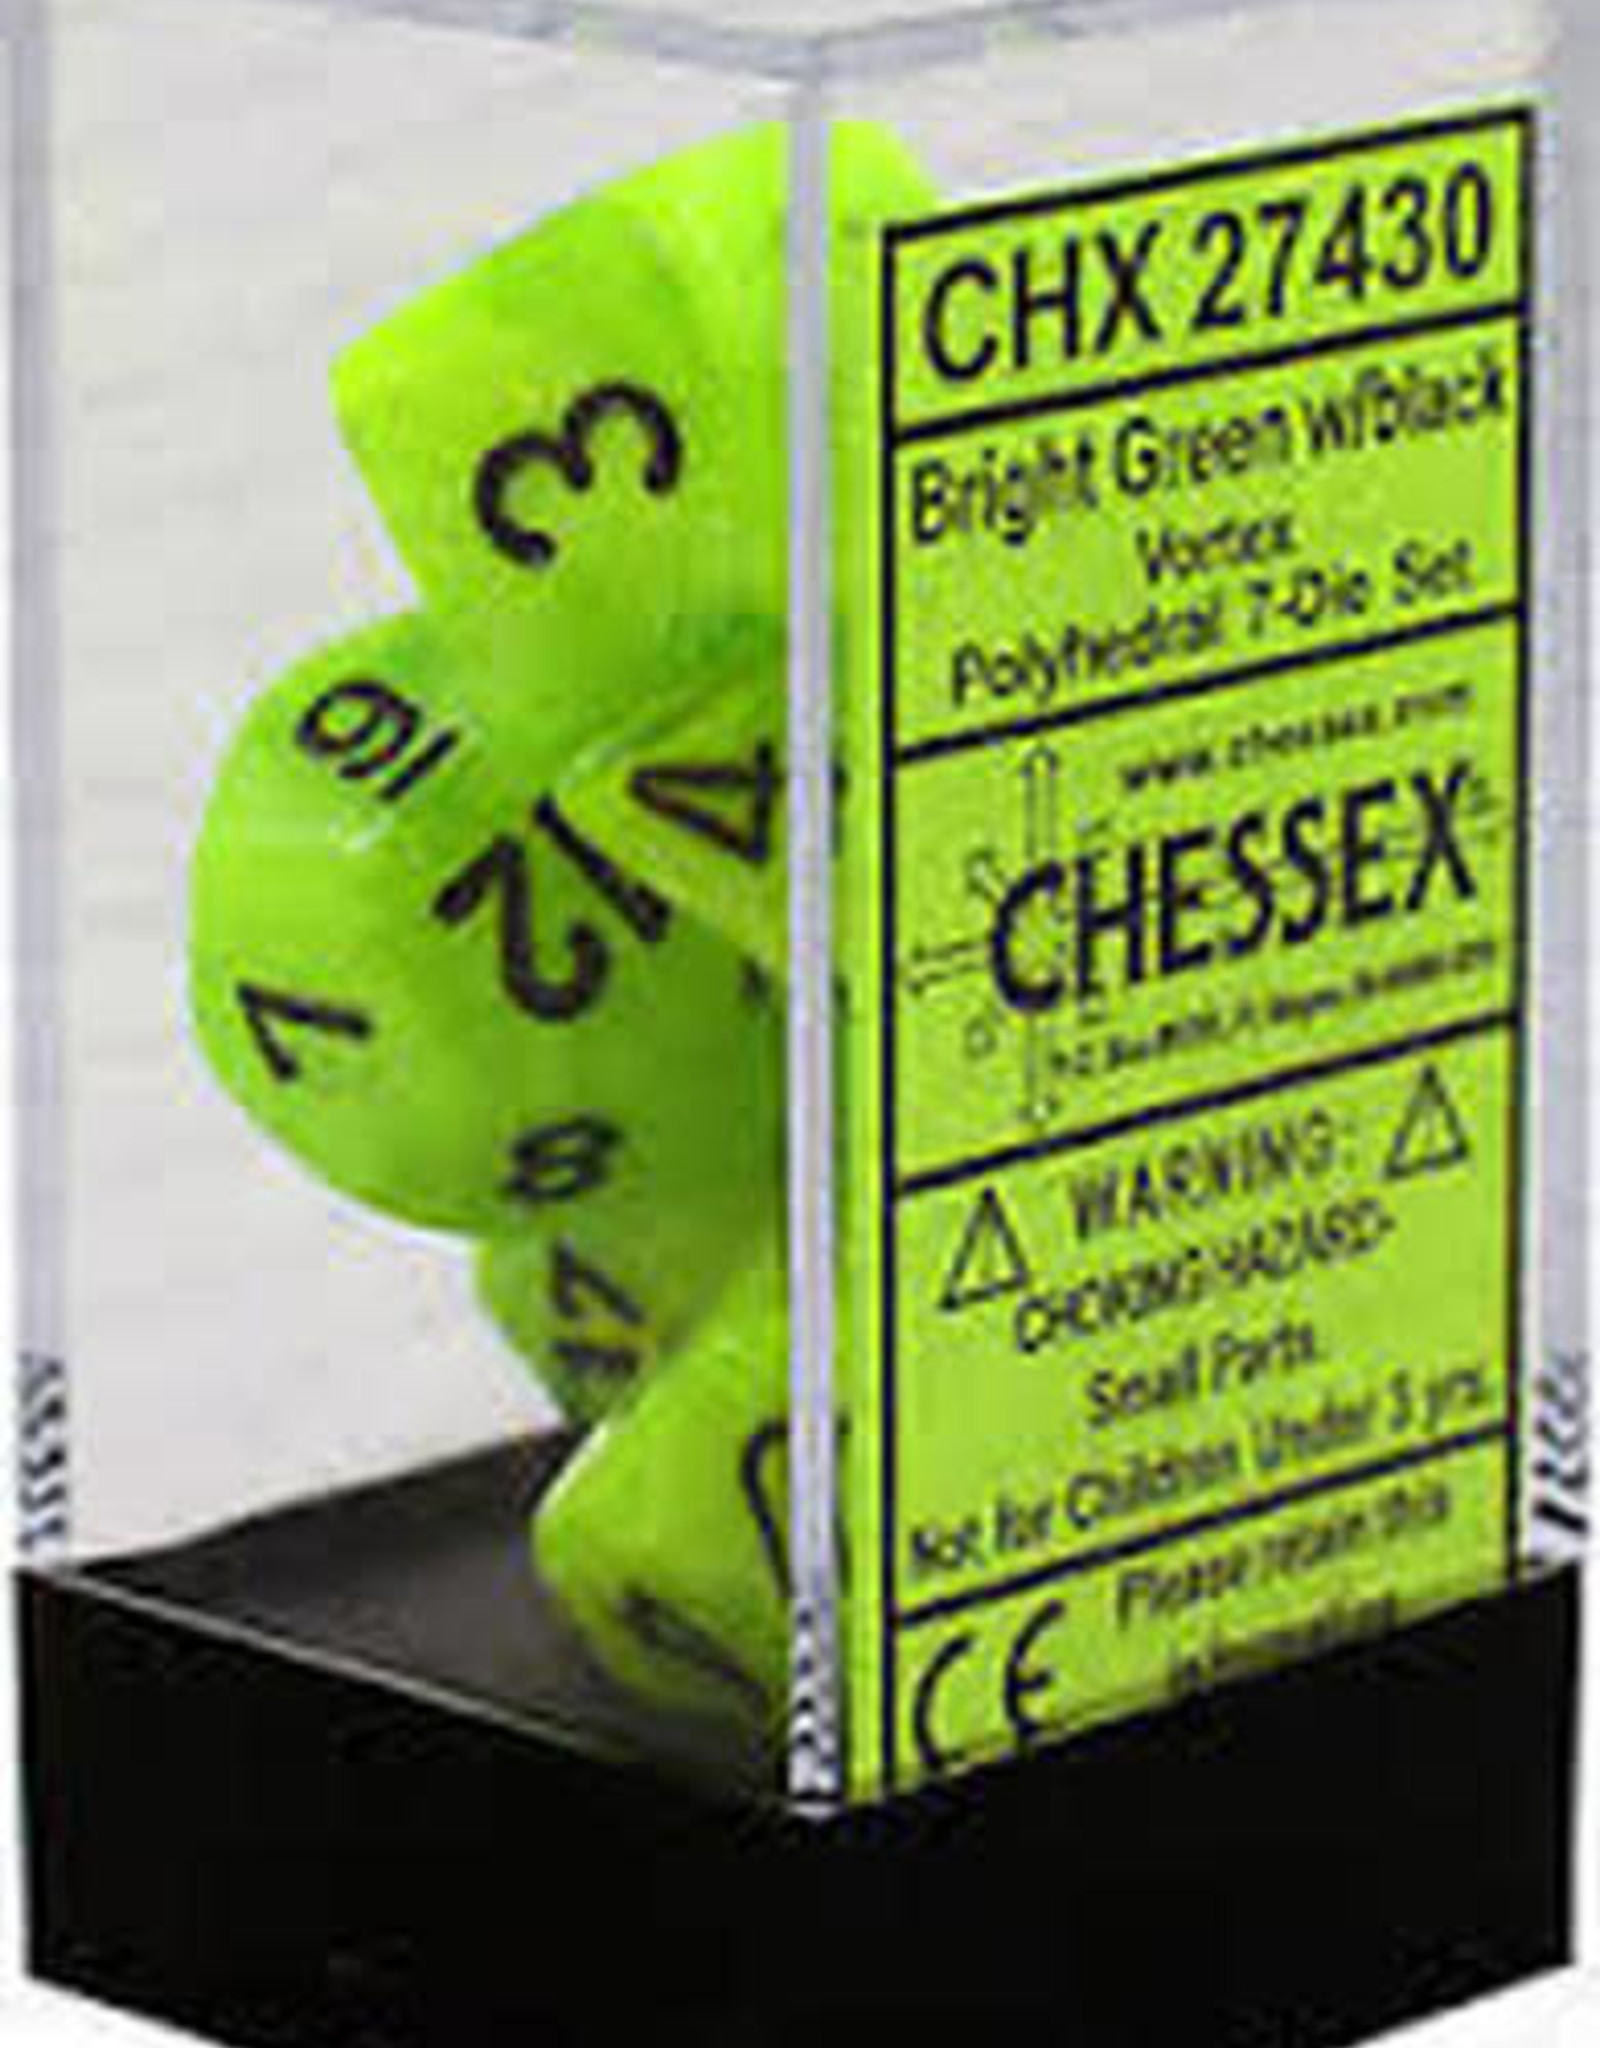 Chessex Poly Dice Set Vortex Bright Green w/ Black